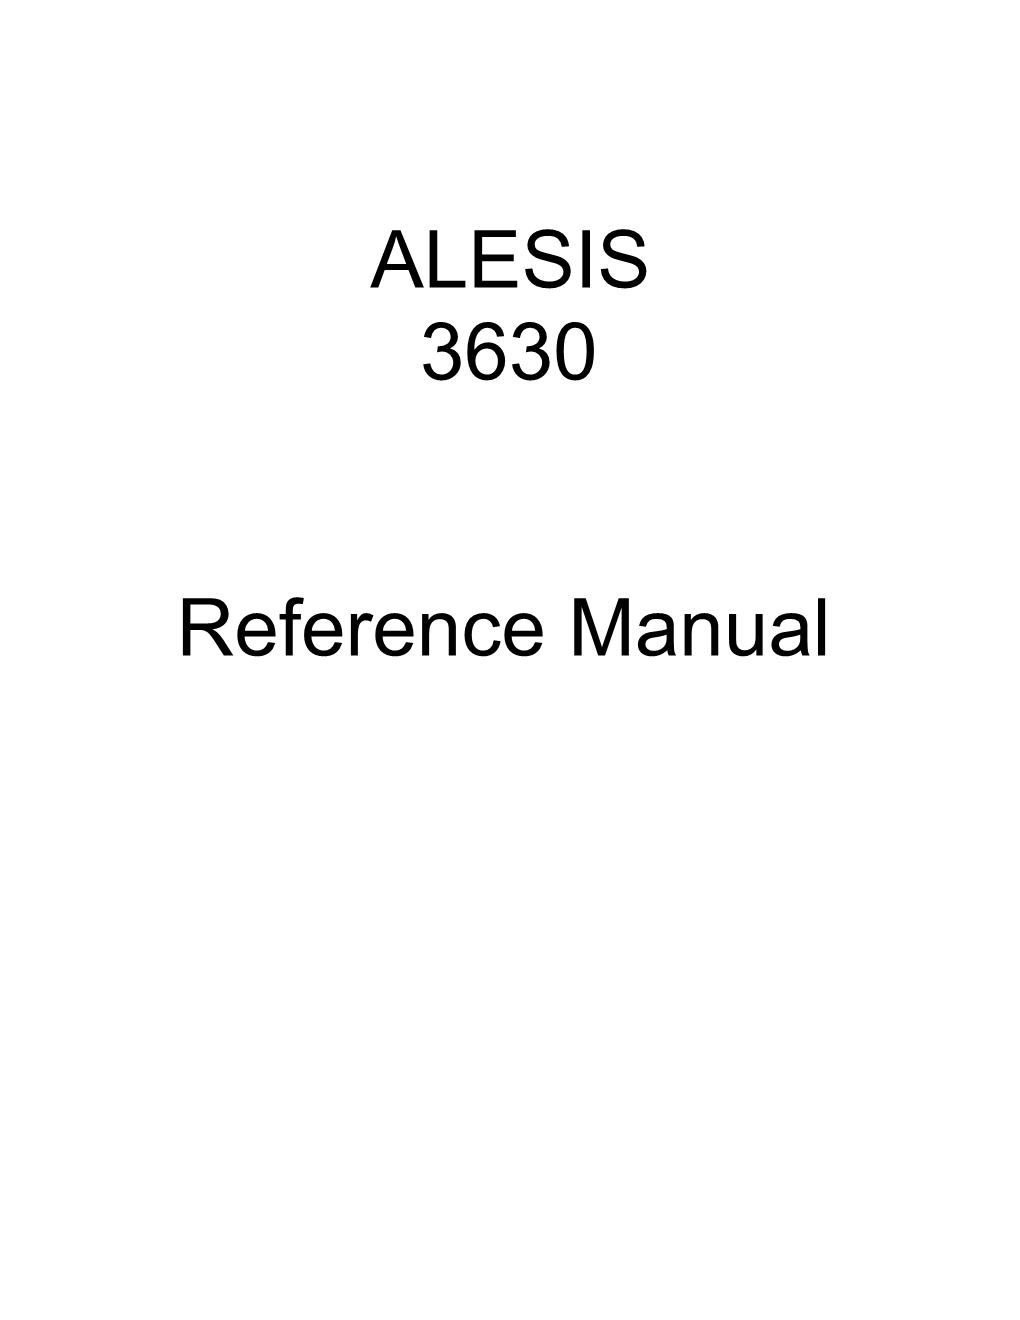 ALESIS 3630 Reference Manual